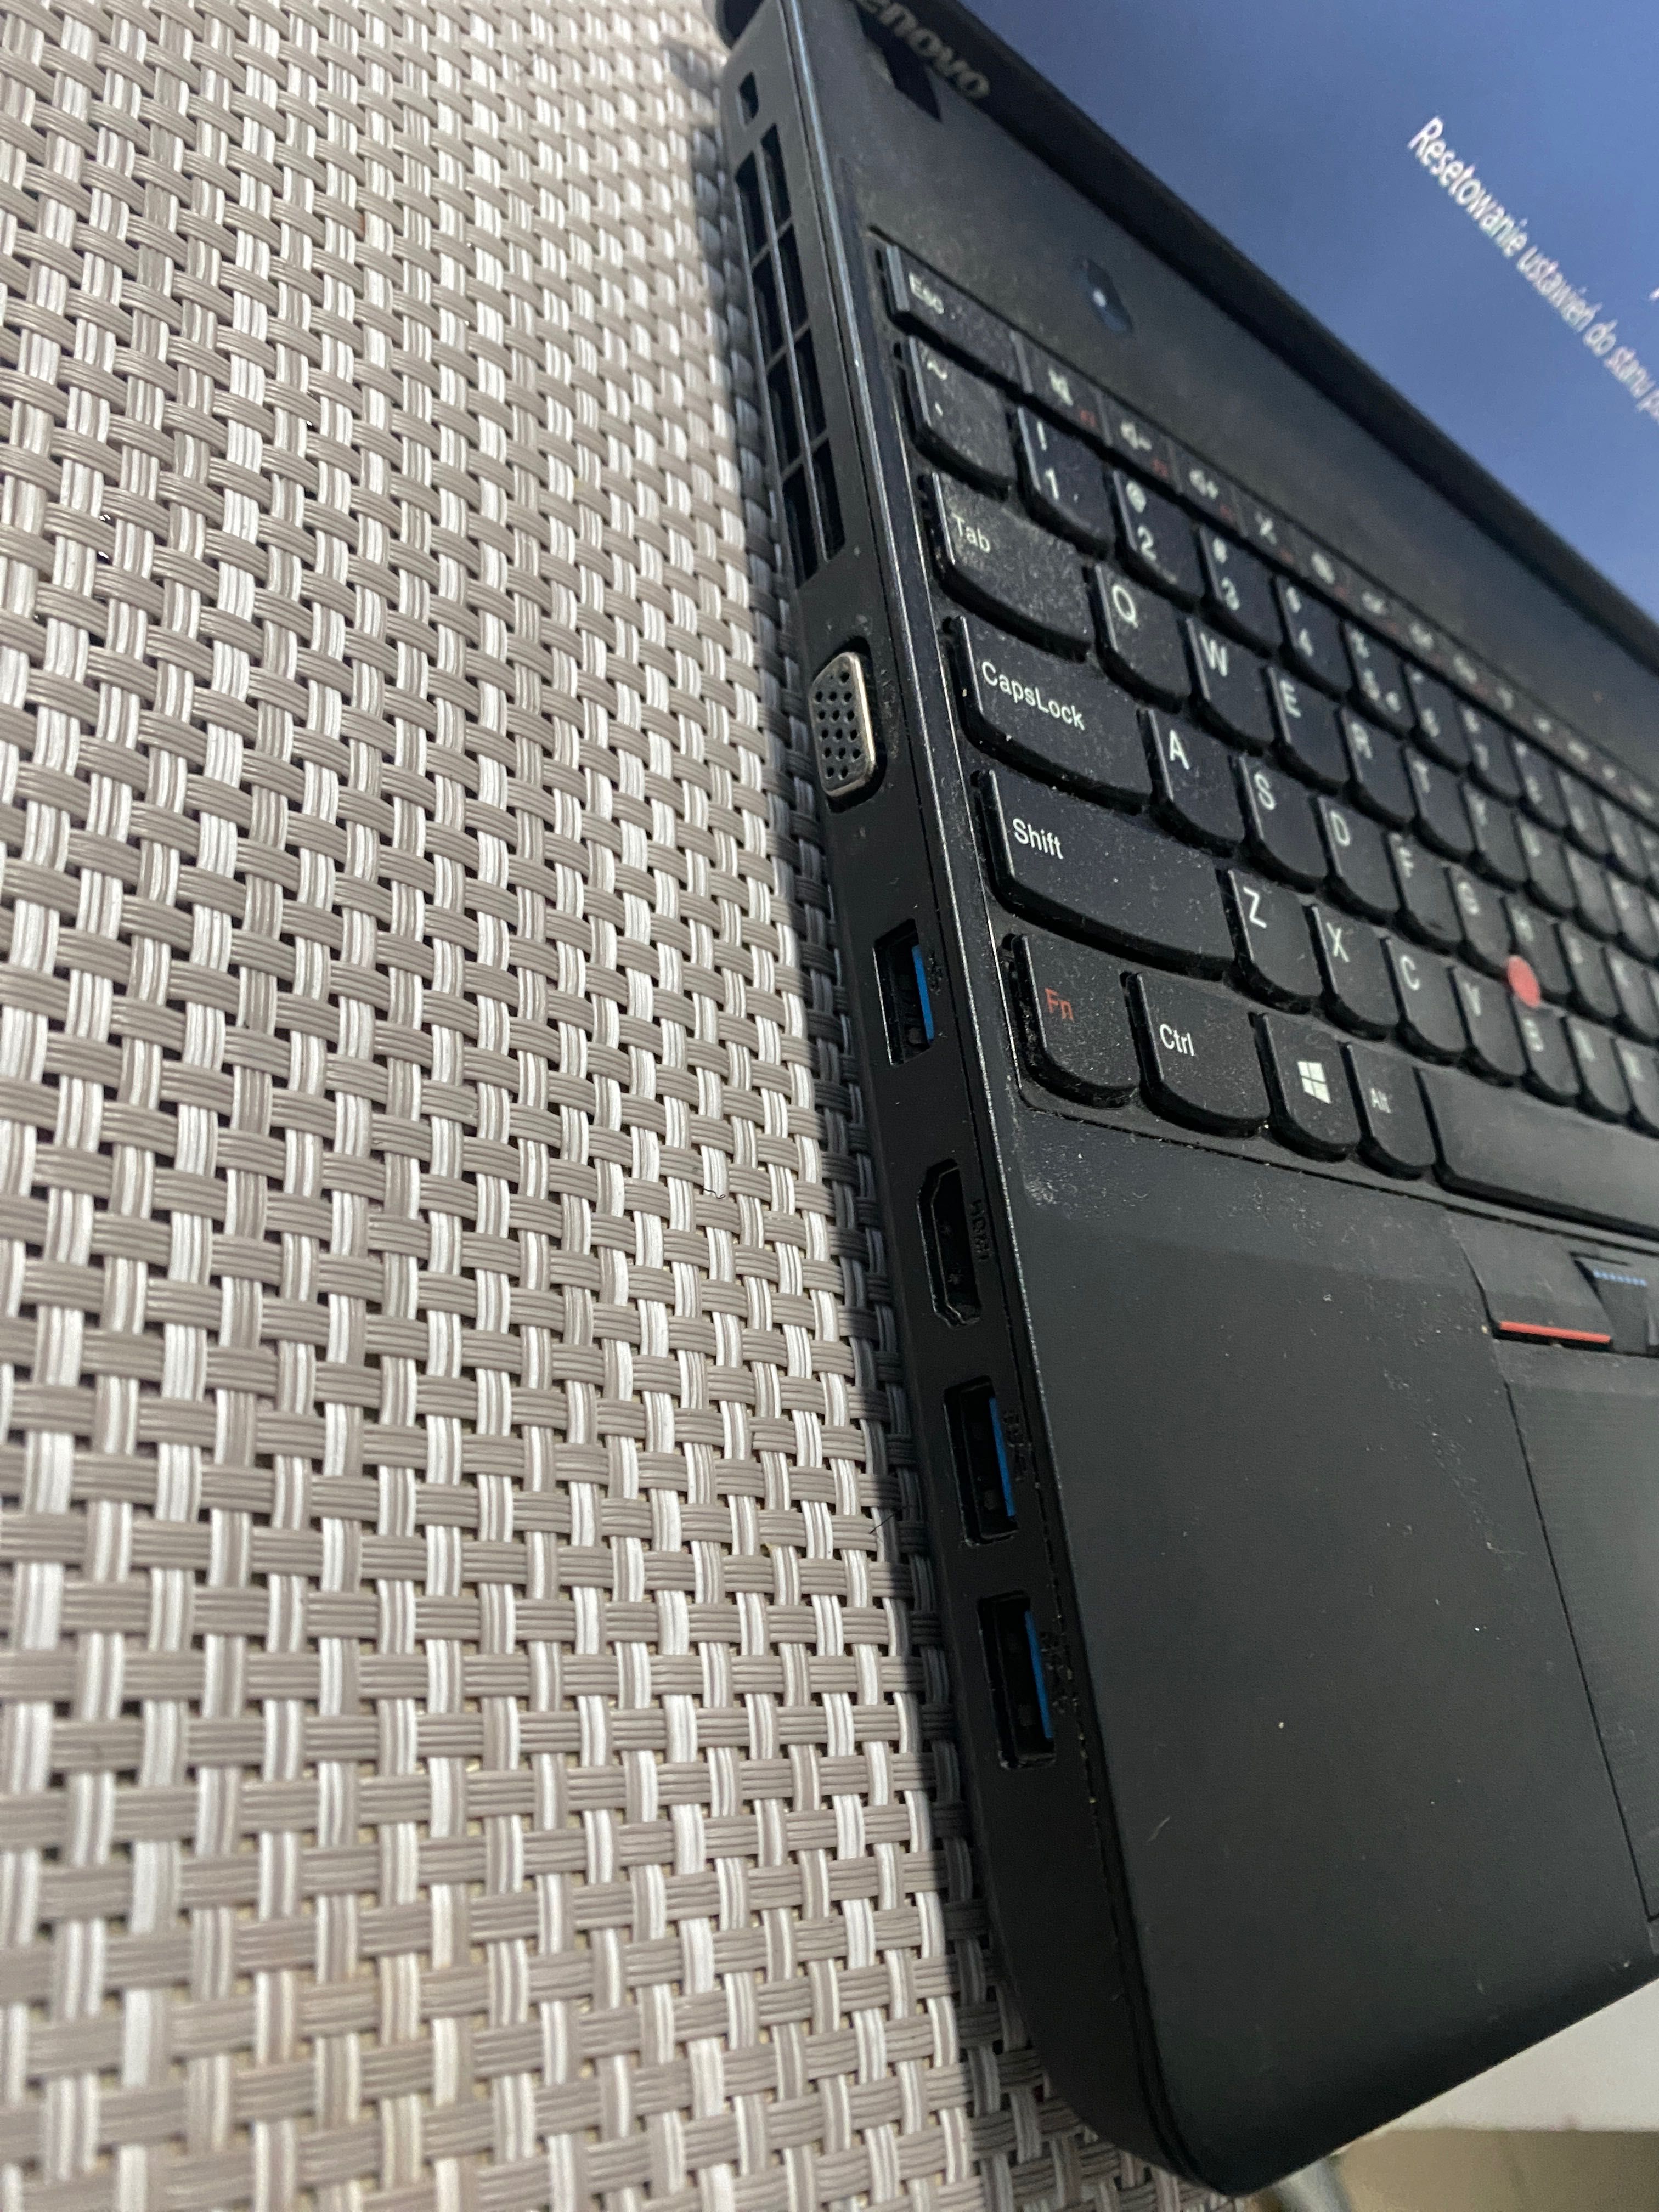 Lenovo ThinkPad E545 SSD 250GB